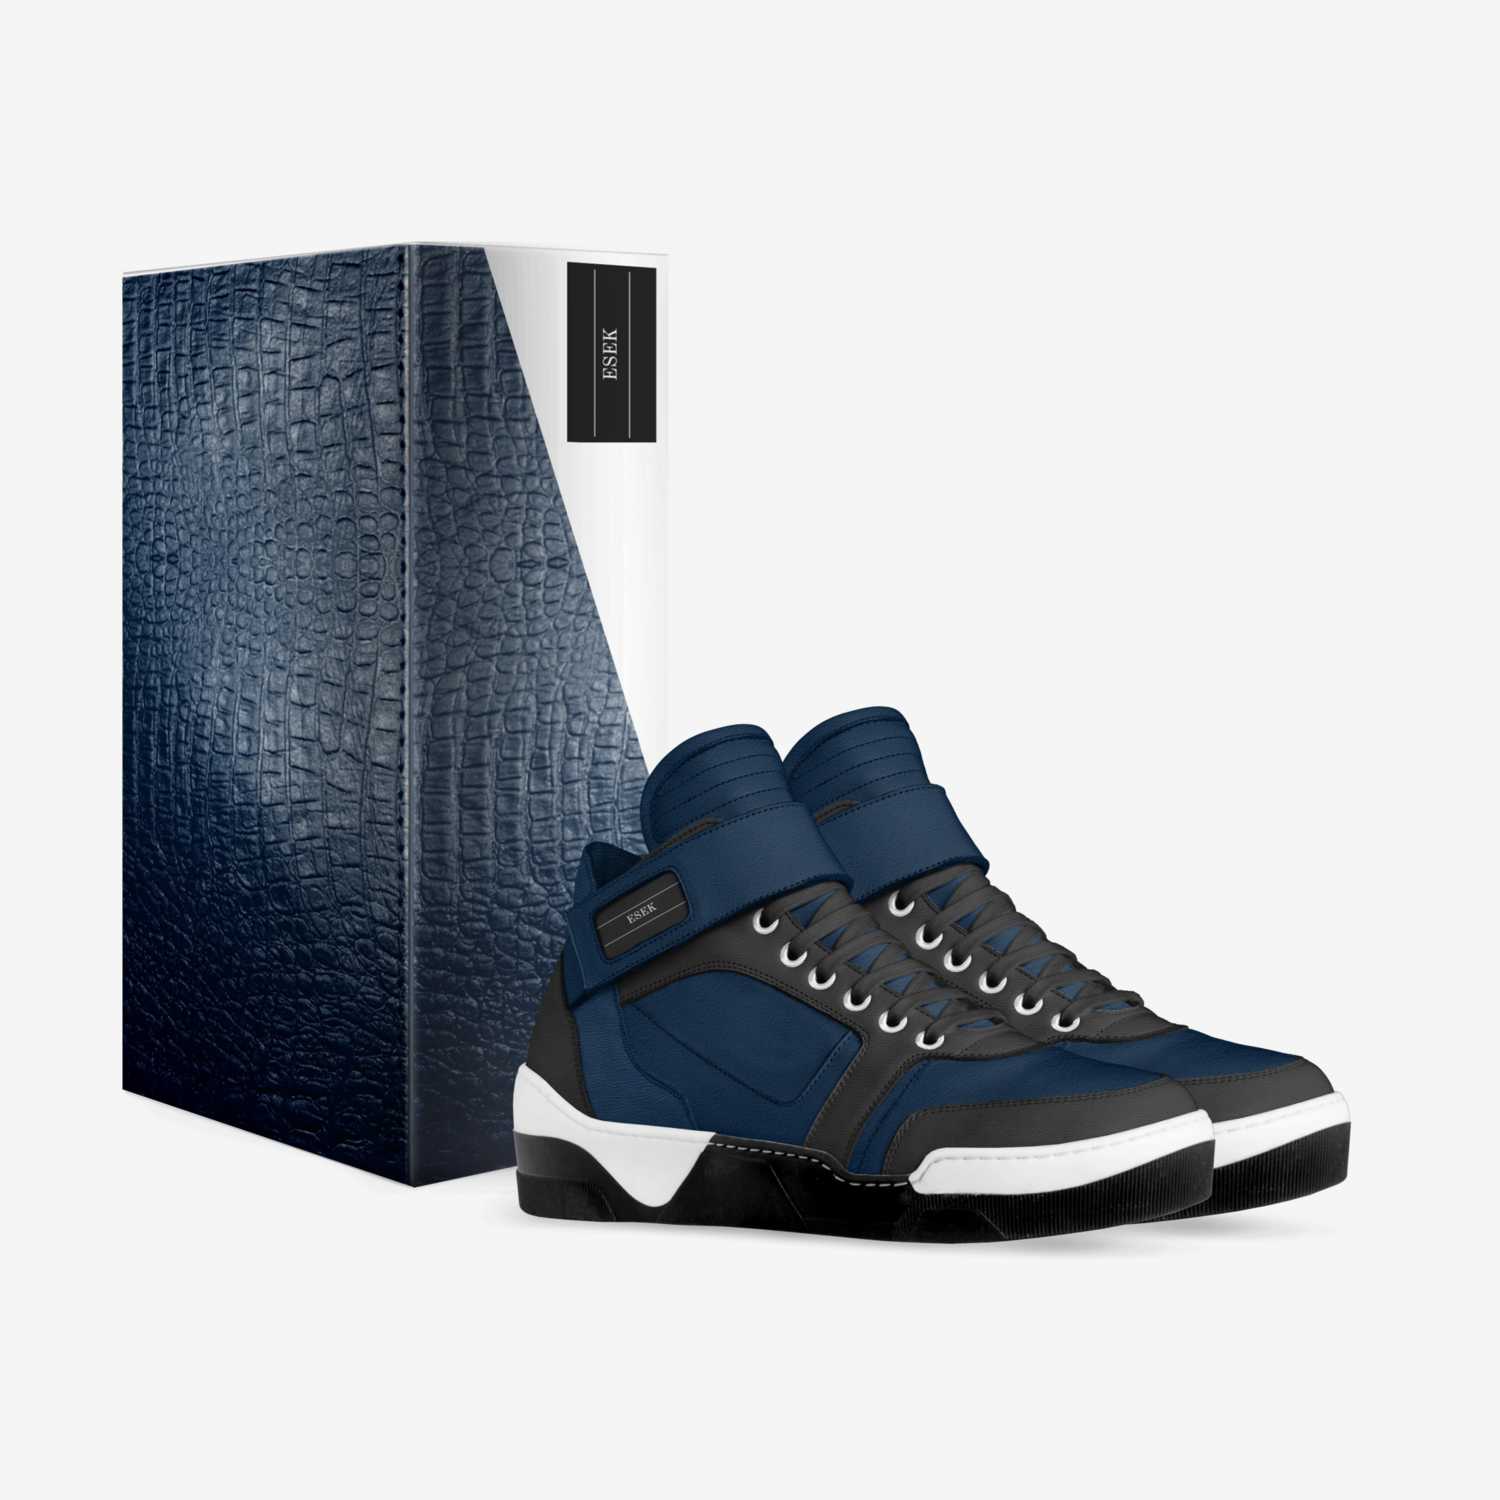 ESEK custom made in Italy shoes by Wayne Reed | Box view